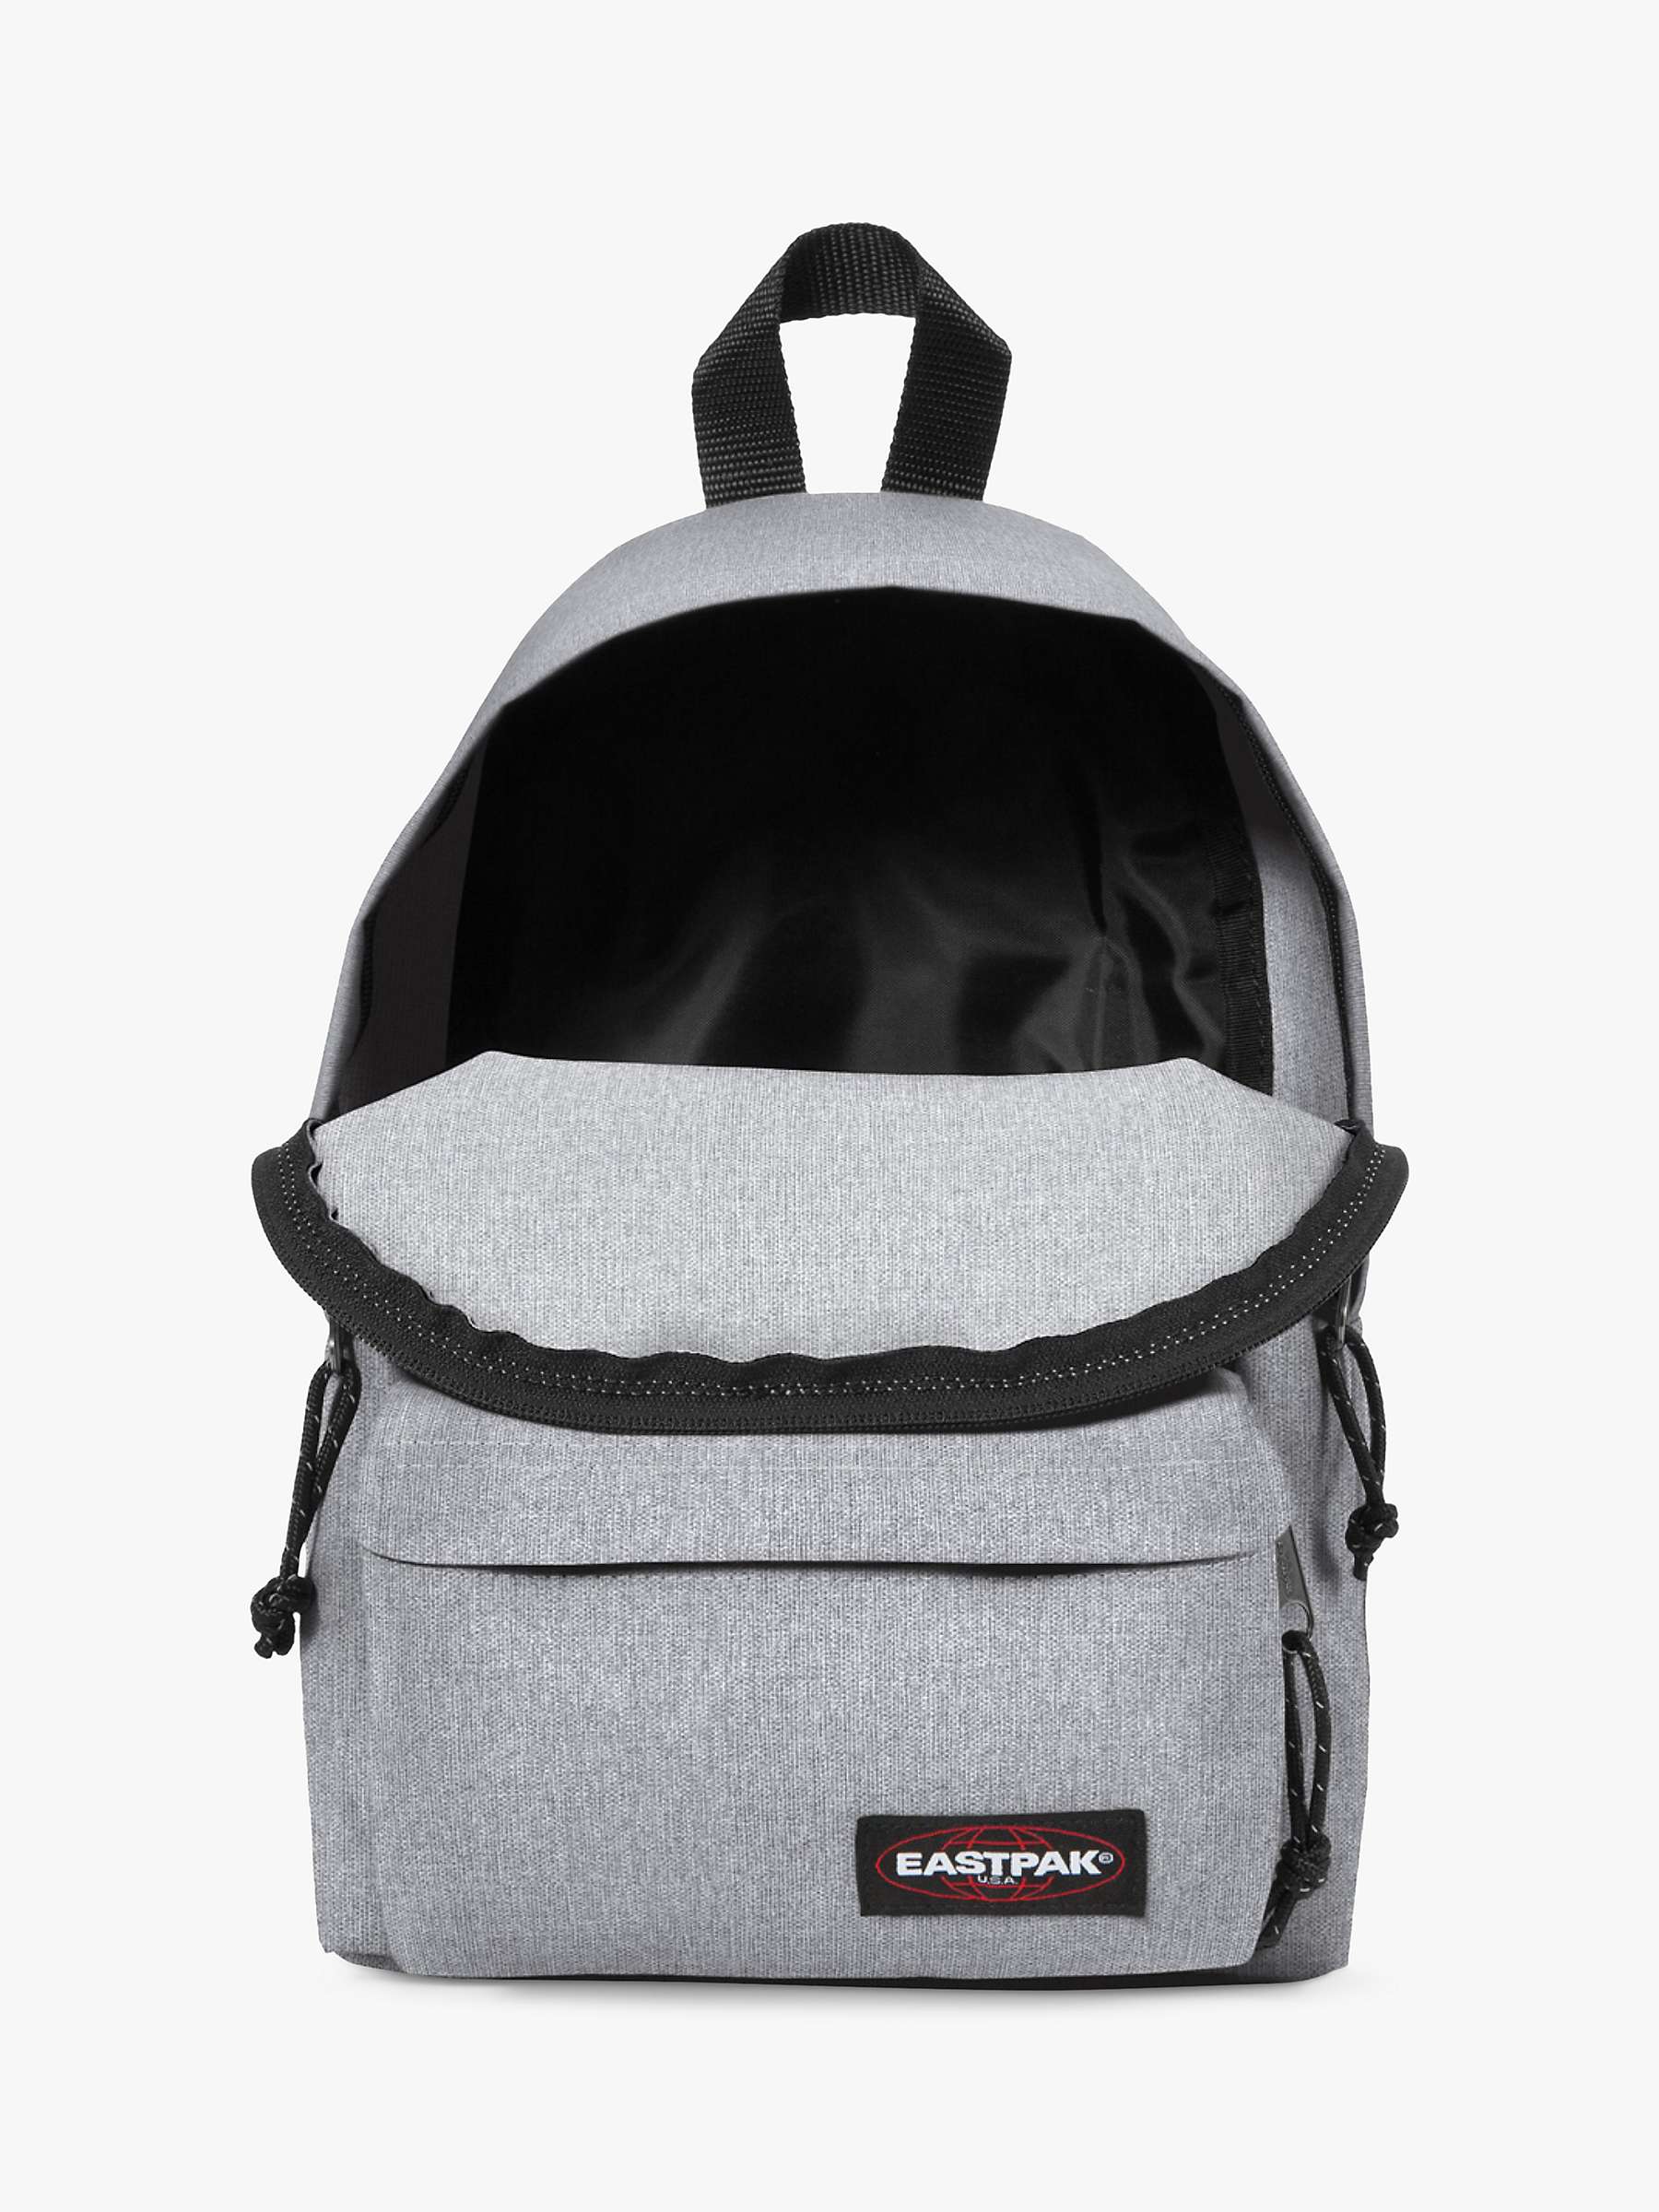 Buy Eastpak Orbit Backpack Online at johnlewis.com